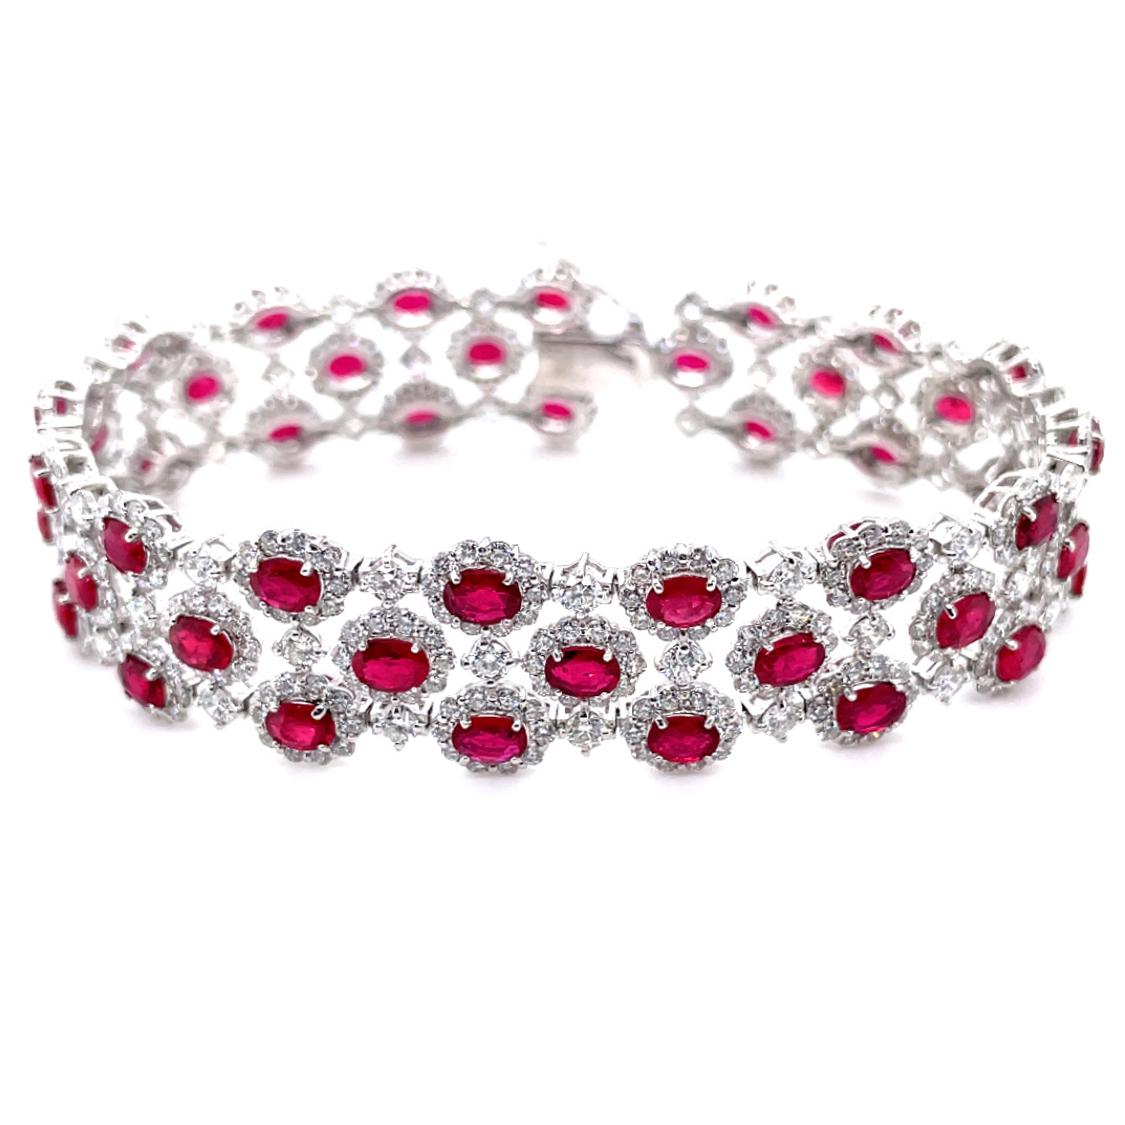 Oval Cut 9.41 Carats Natural Rubies and Diamonds 3 Line Bracelet Set in Platinum